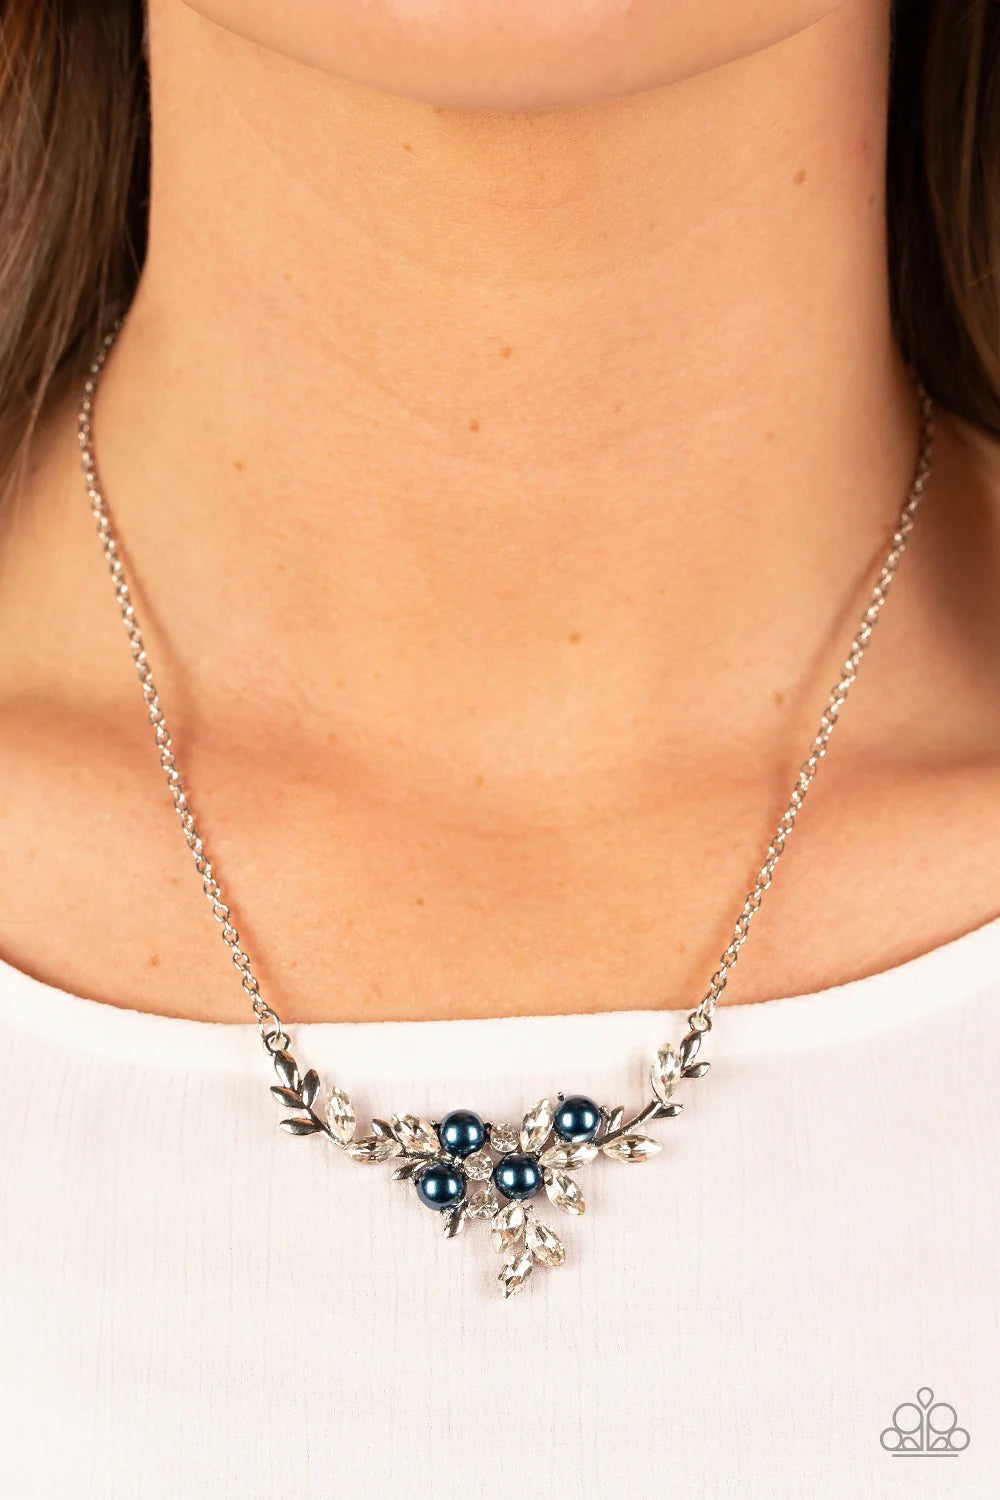 Paparazzi “Because I'm The Bride” Blue Necklace Earring Set - Cindysblingboutique